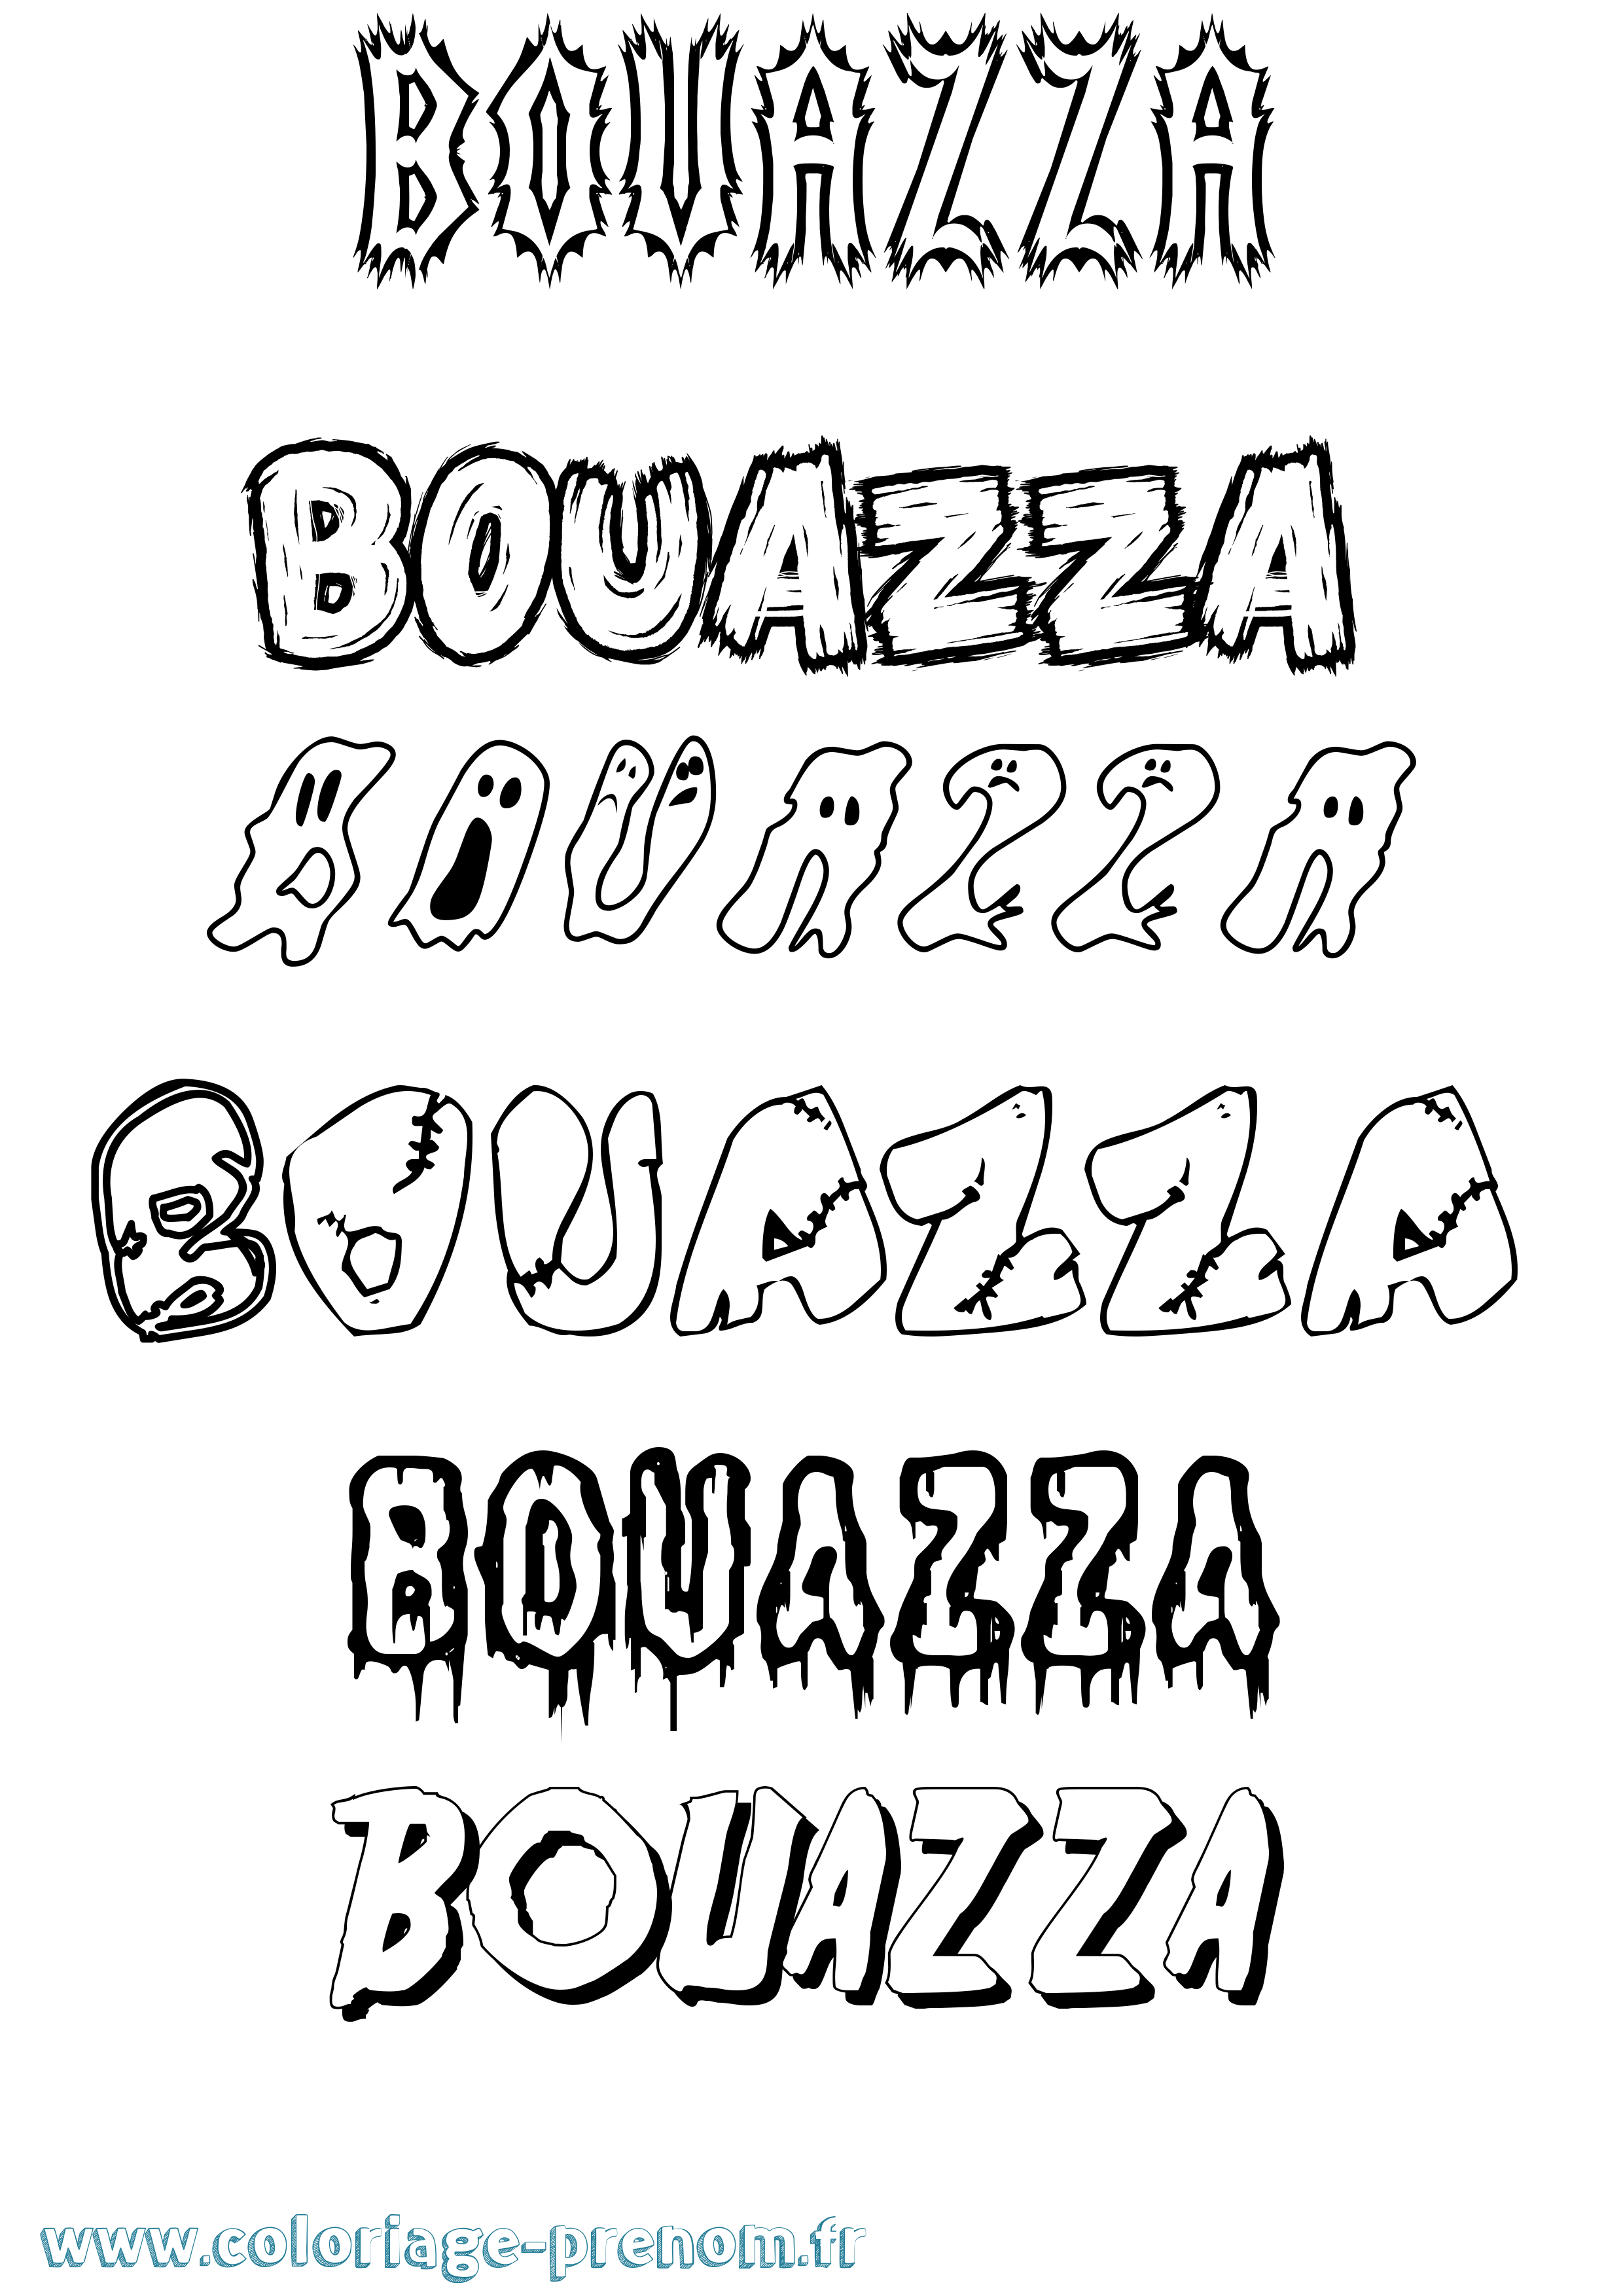 Coloriage prénom Bouazza Frisson